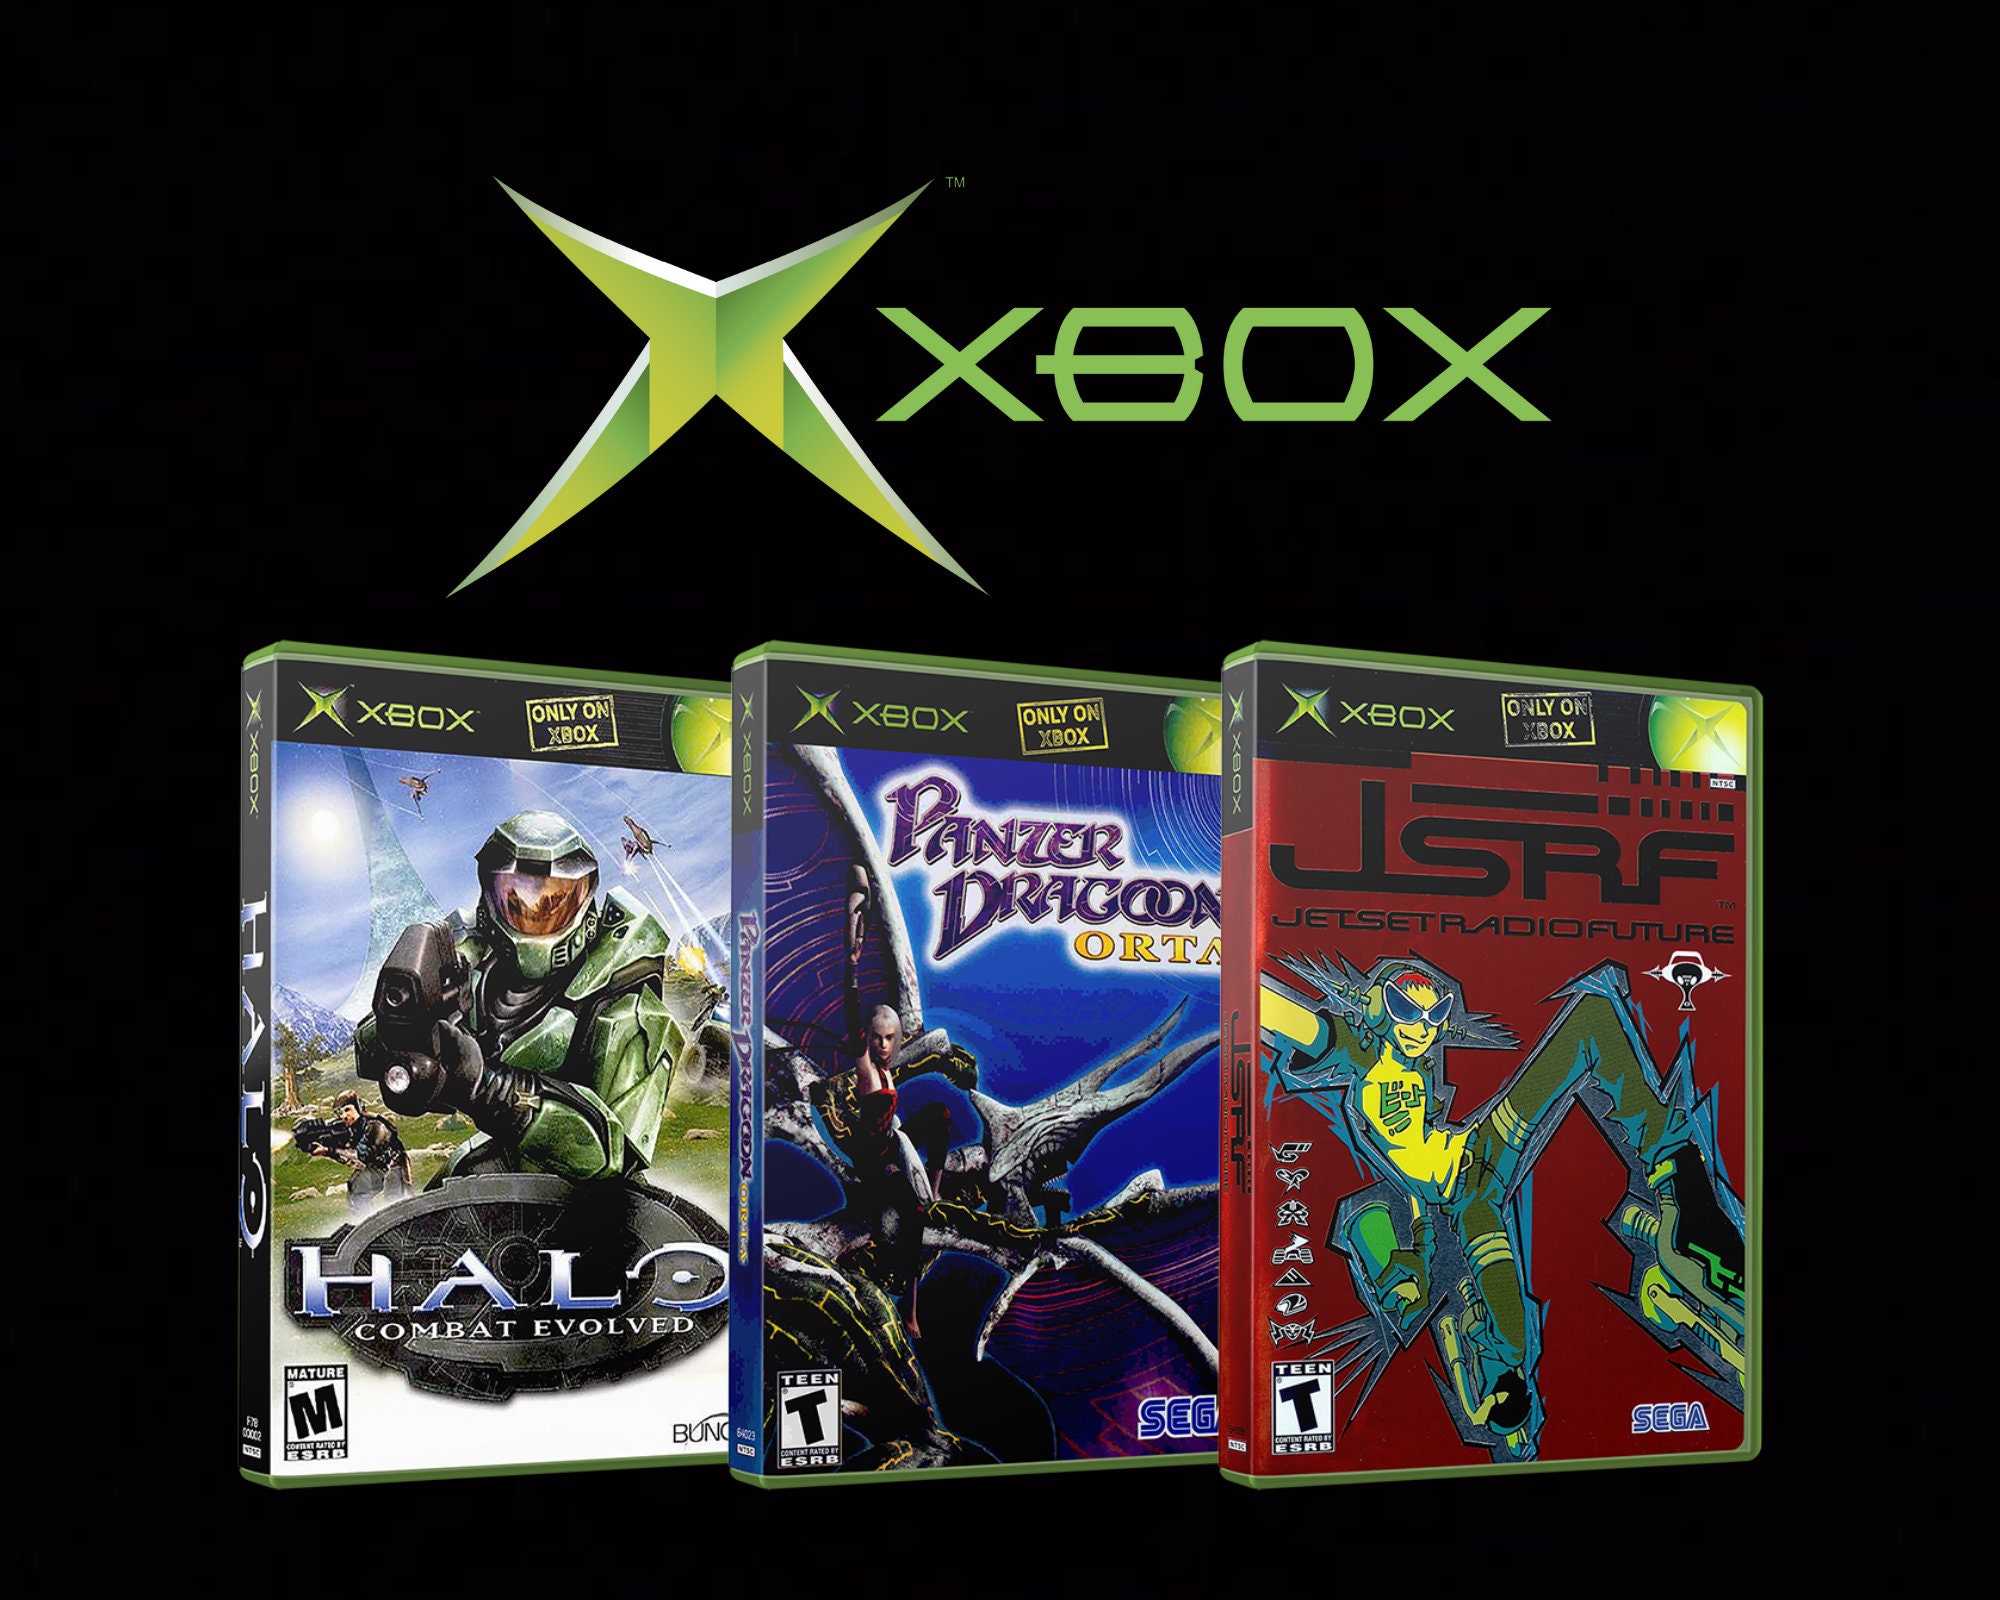 Xbox 360, White RGH Jtag Console Only Region free￼1 Year warranty￼